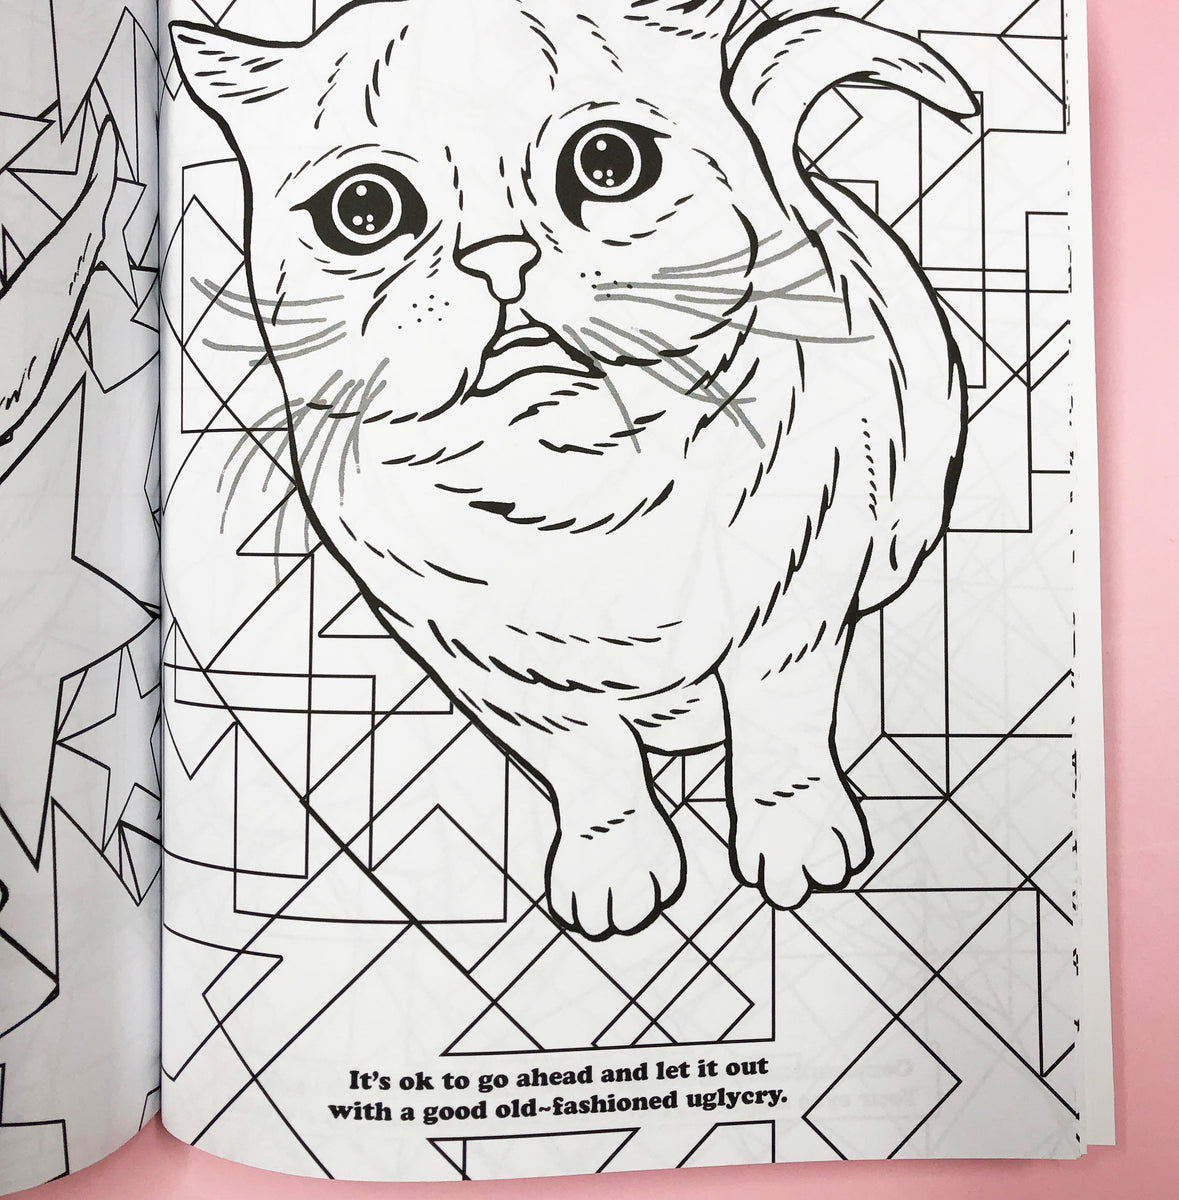 Depression Cats Coloring Book – Wokeface